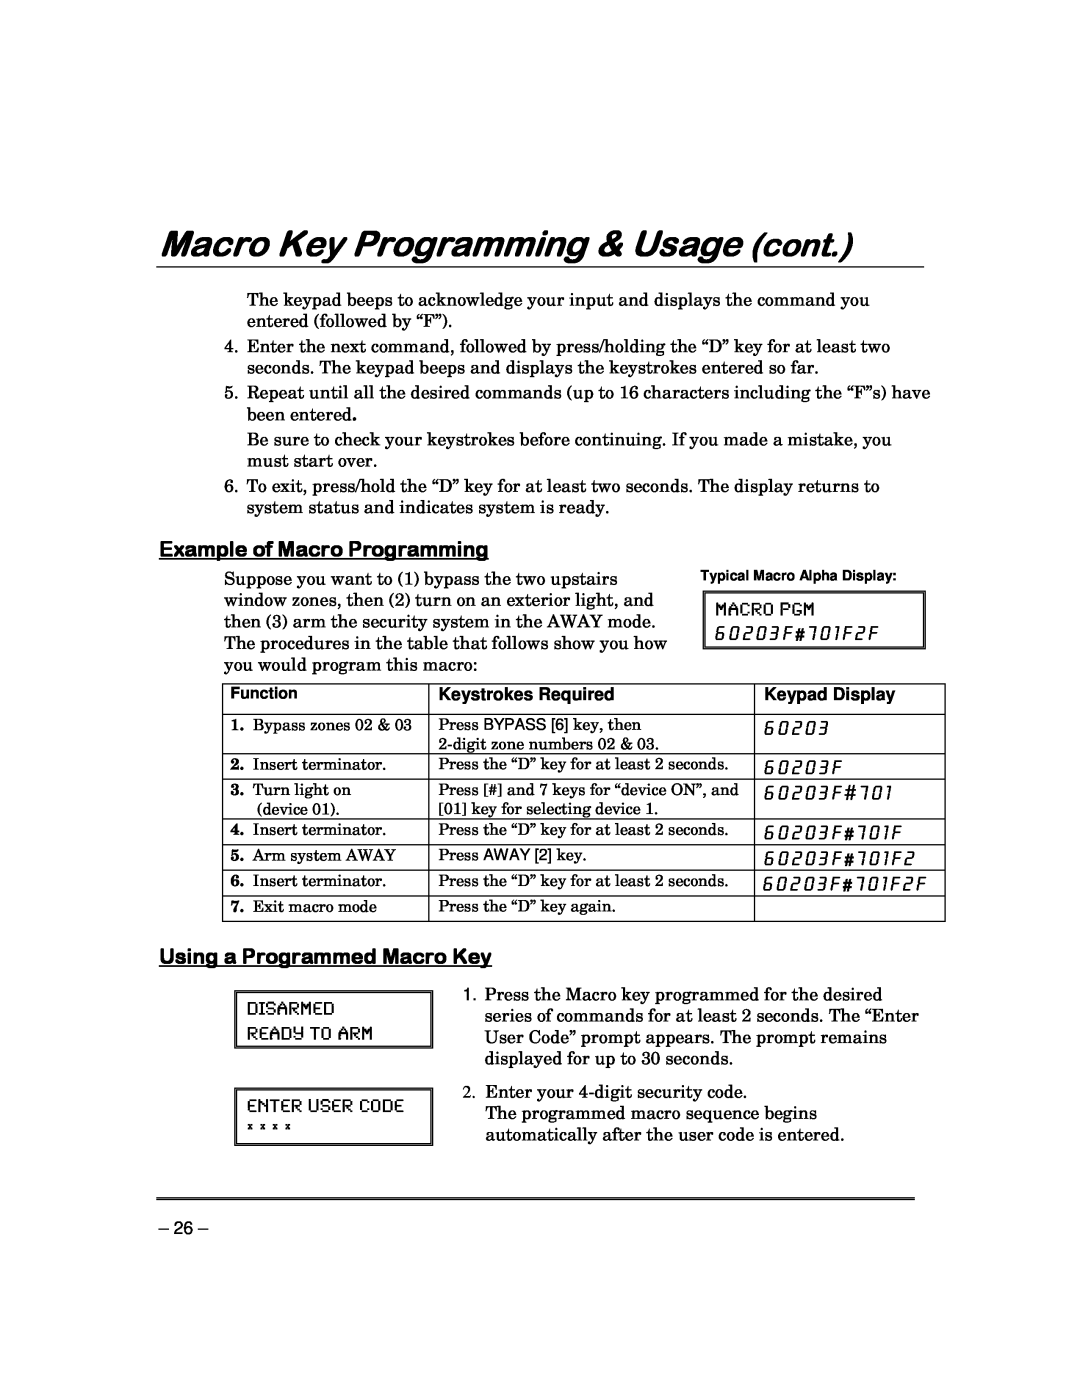 Garmin FA168CPS Macro Key Programming & Usage cont, Example of Macro Programming, Using a Programmed Macro Key, Macro Pgm 